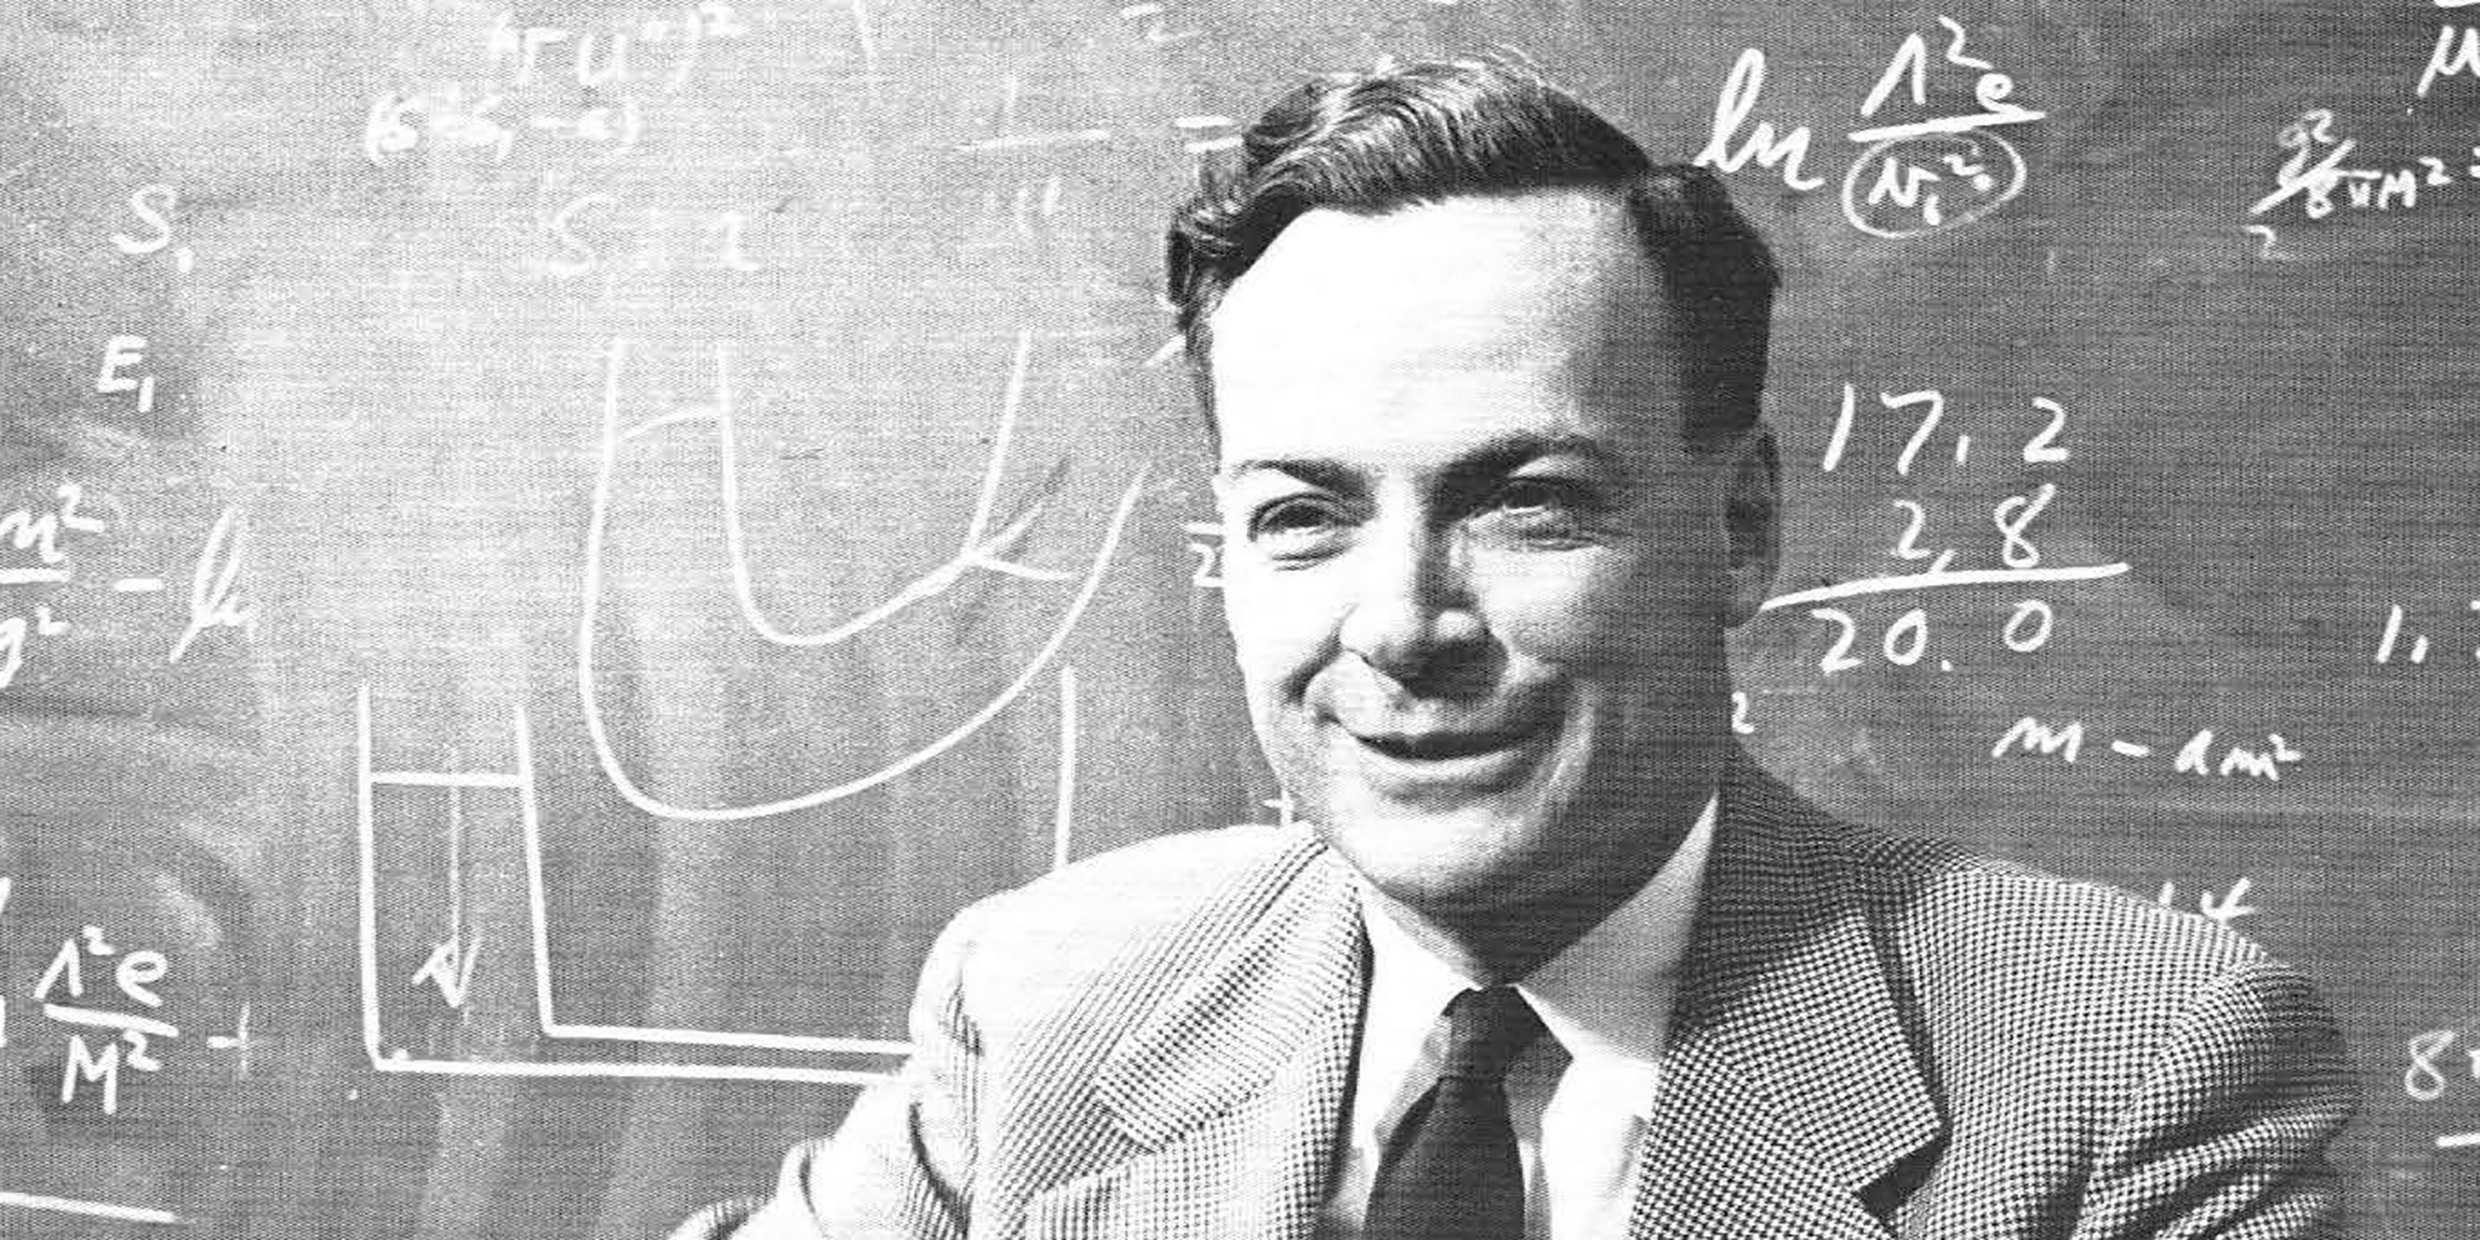 Feynman’s magic